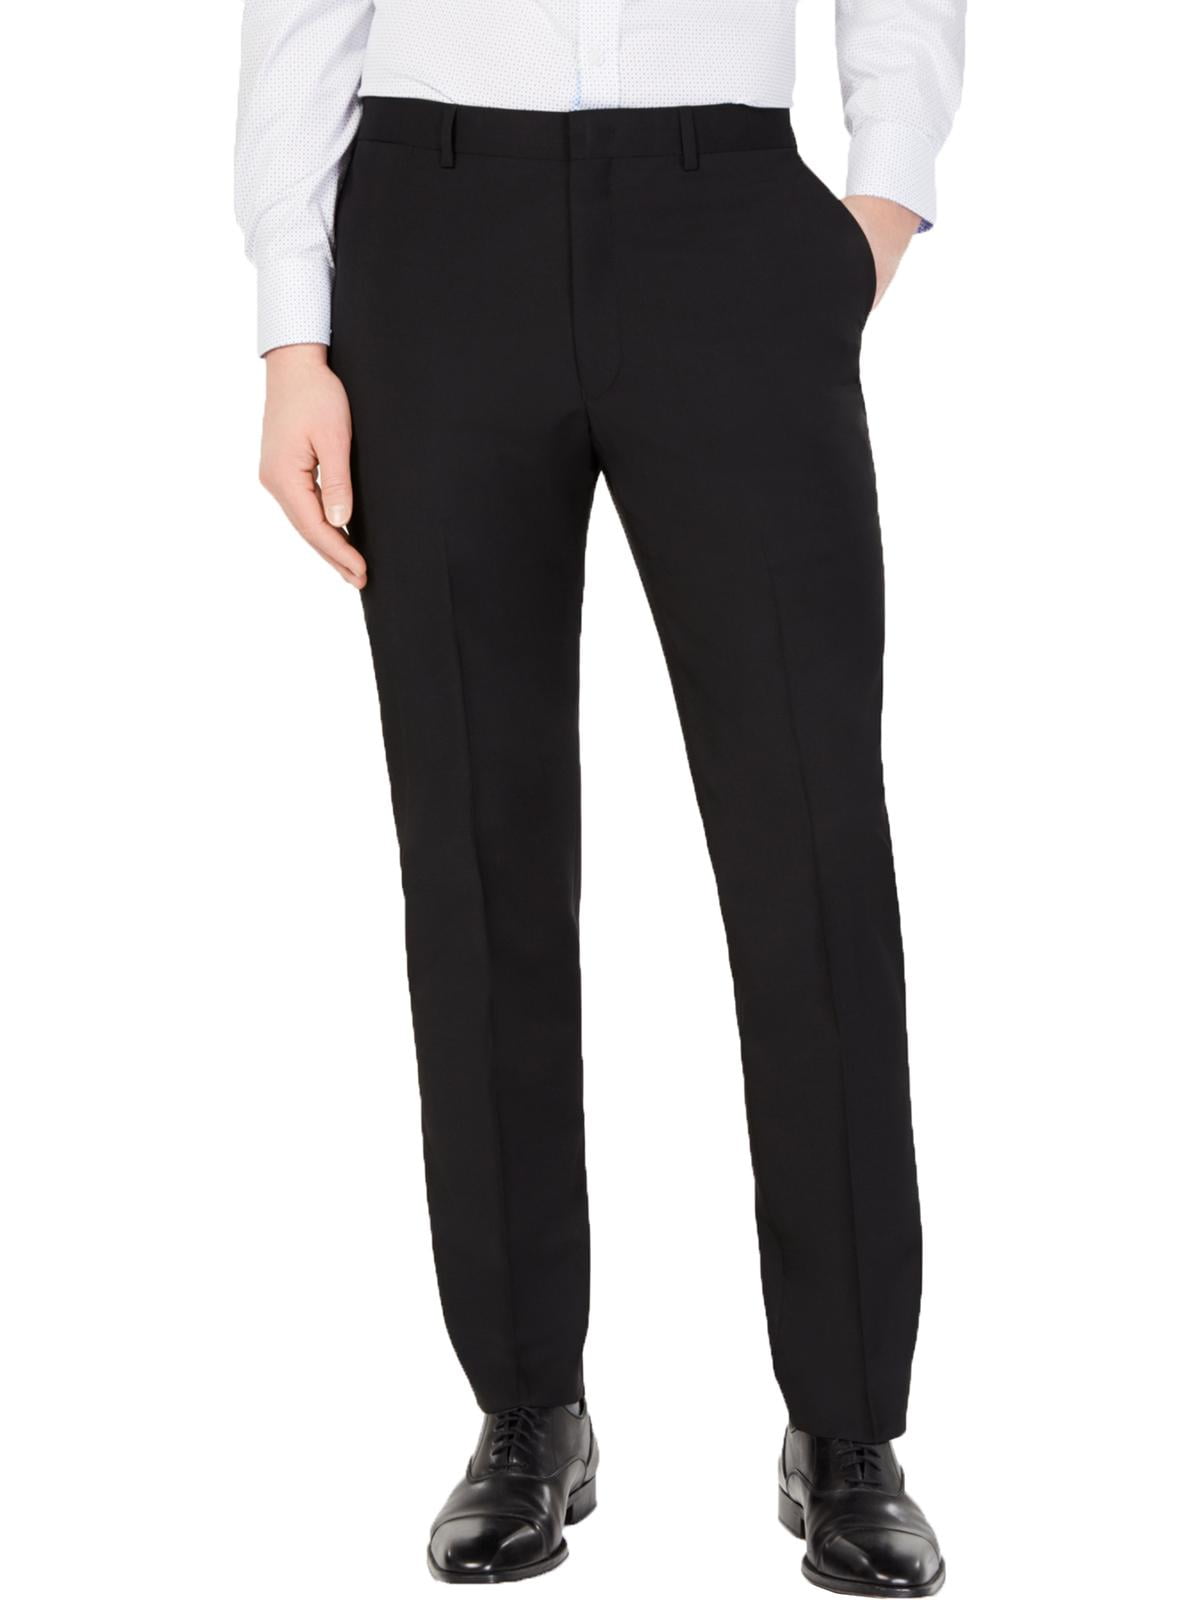 DKNY Men's Modern-Fit Stretch Black Solid Suit Pants Black Size 34X32 ...